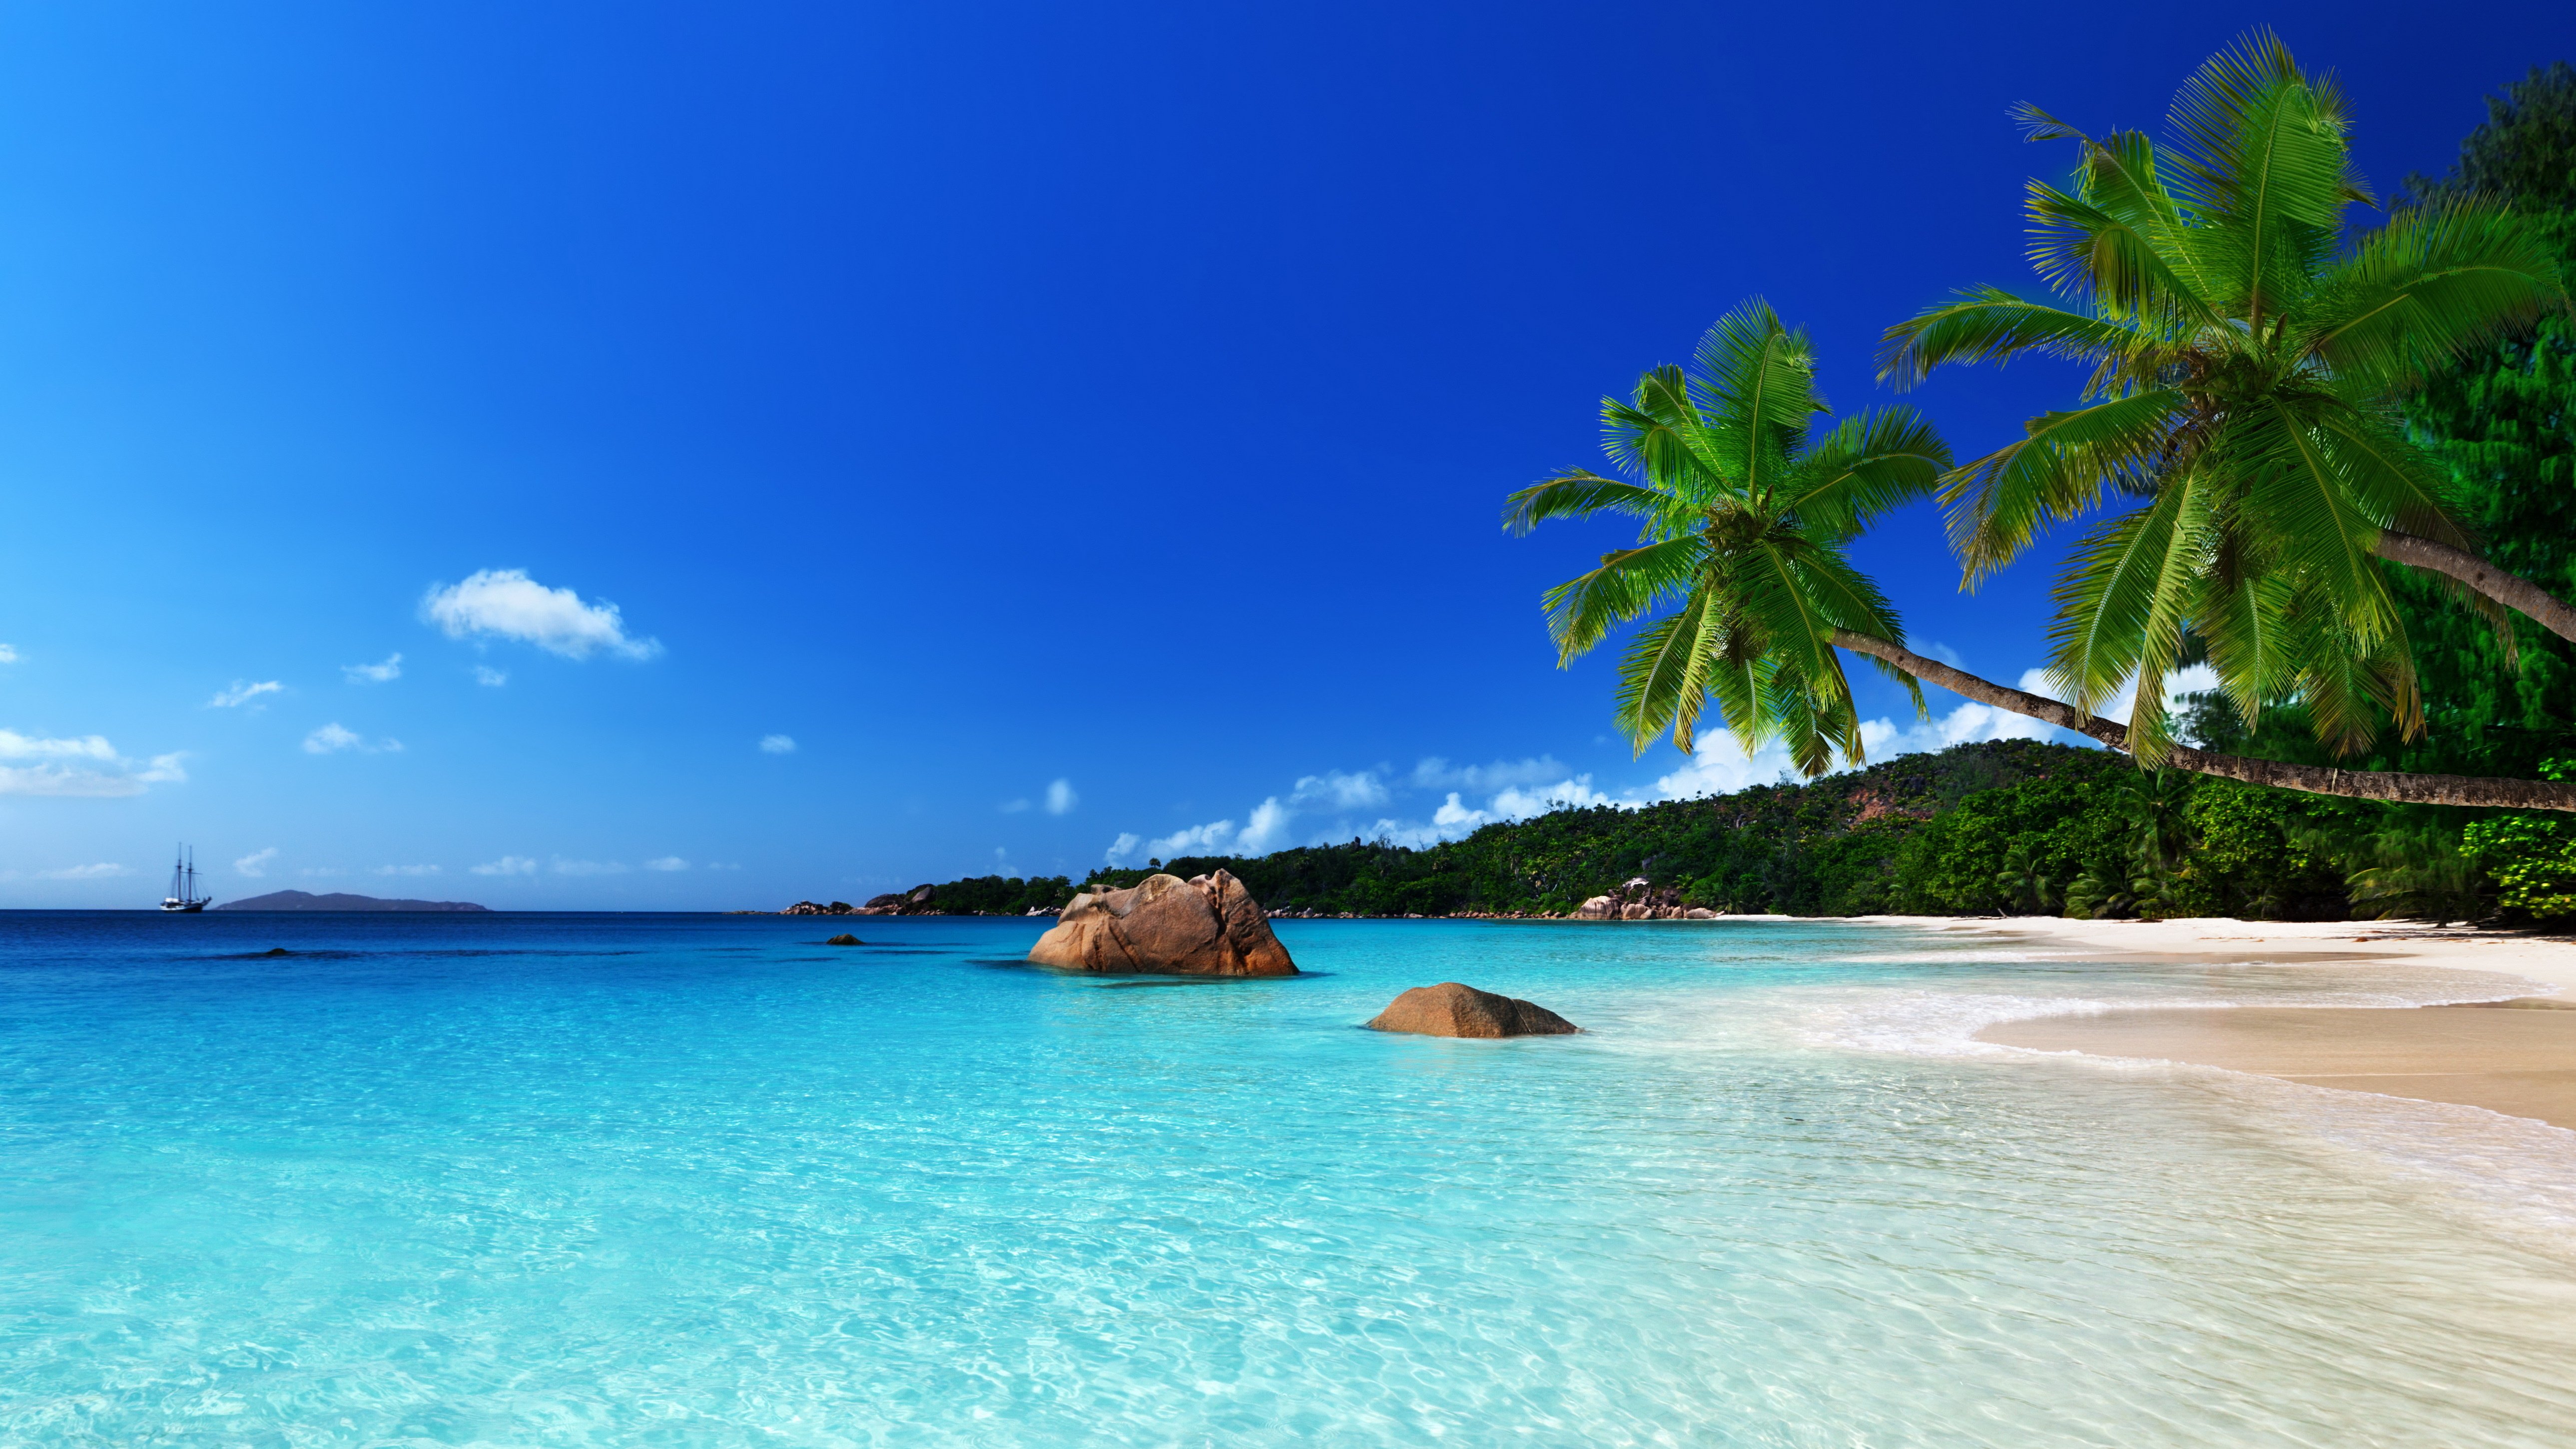 Tropical Beach Paradise Background Image